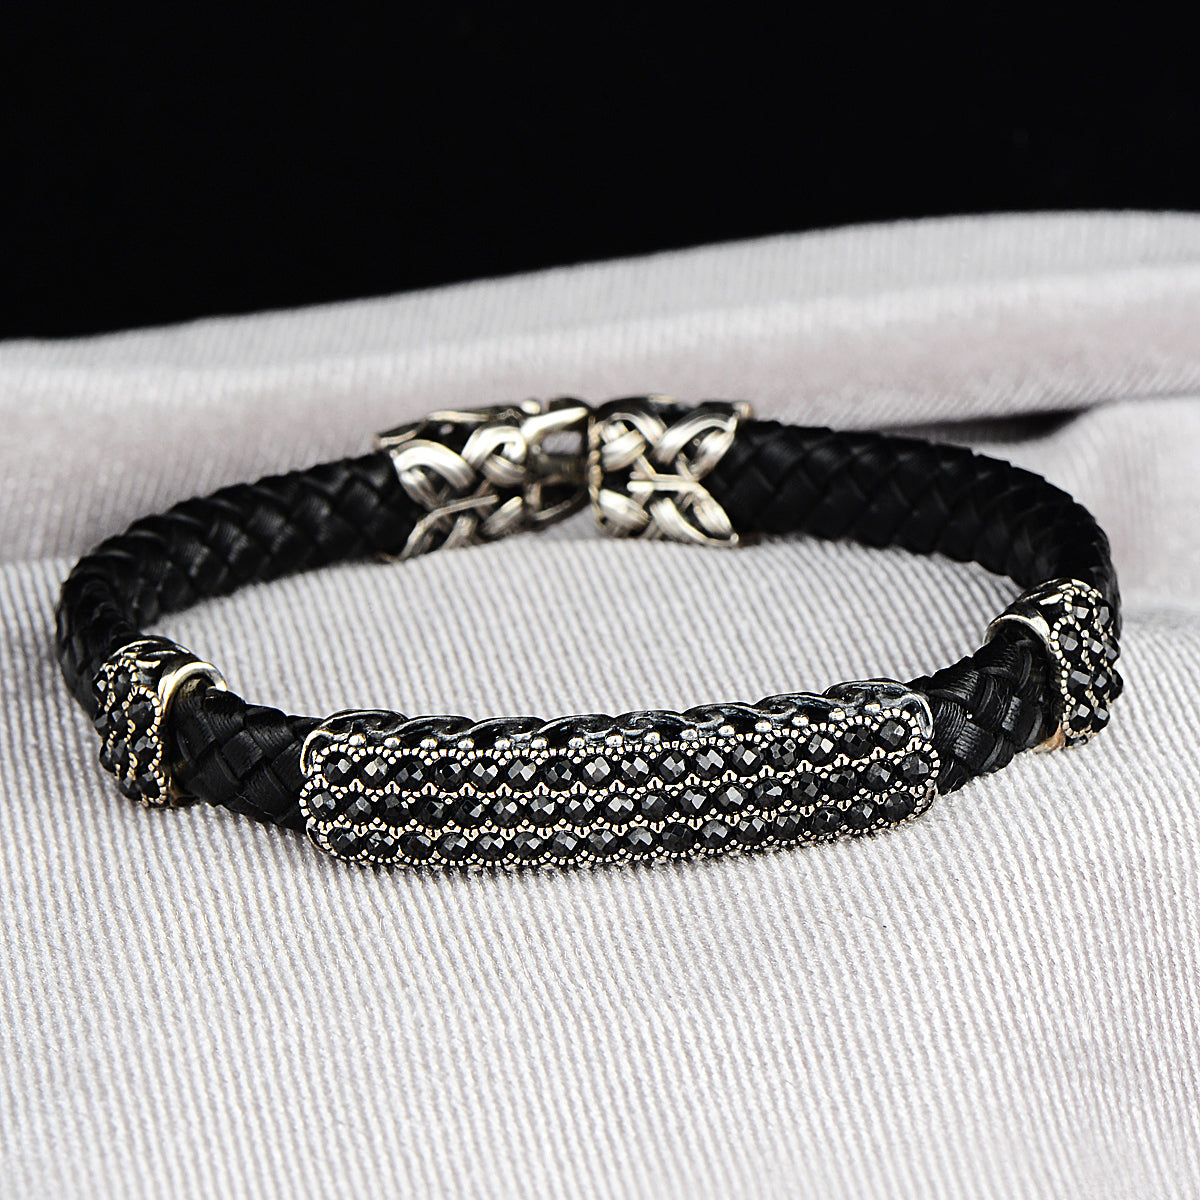 Silver Handmade Black Leather Bracelet